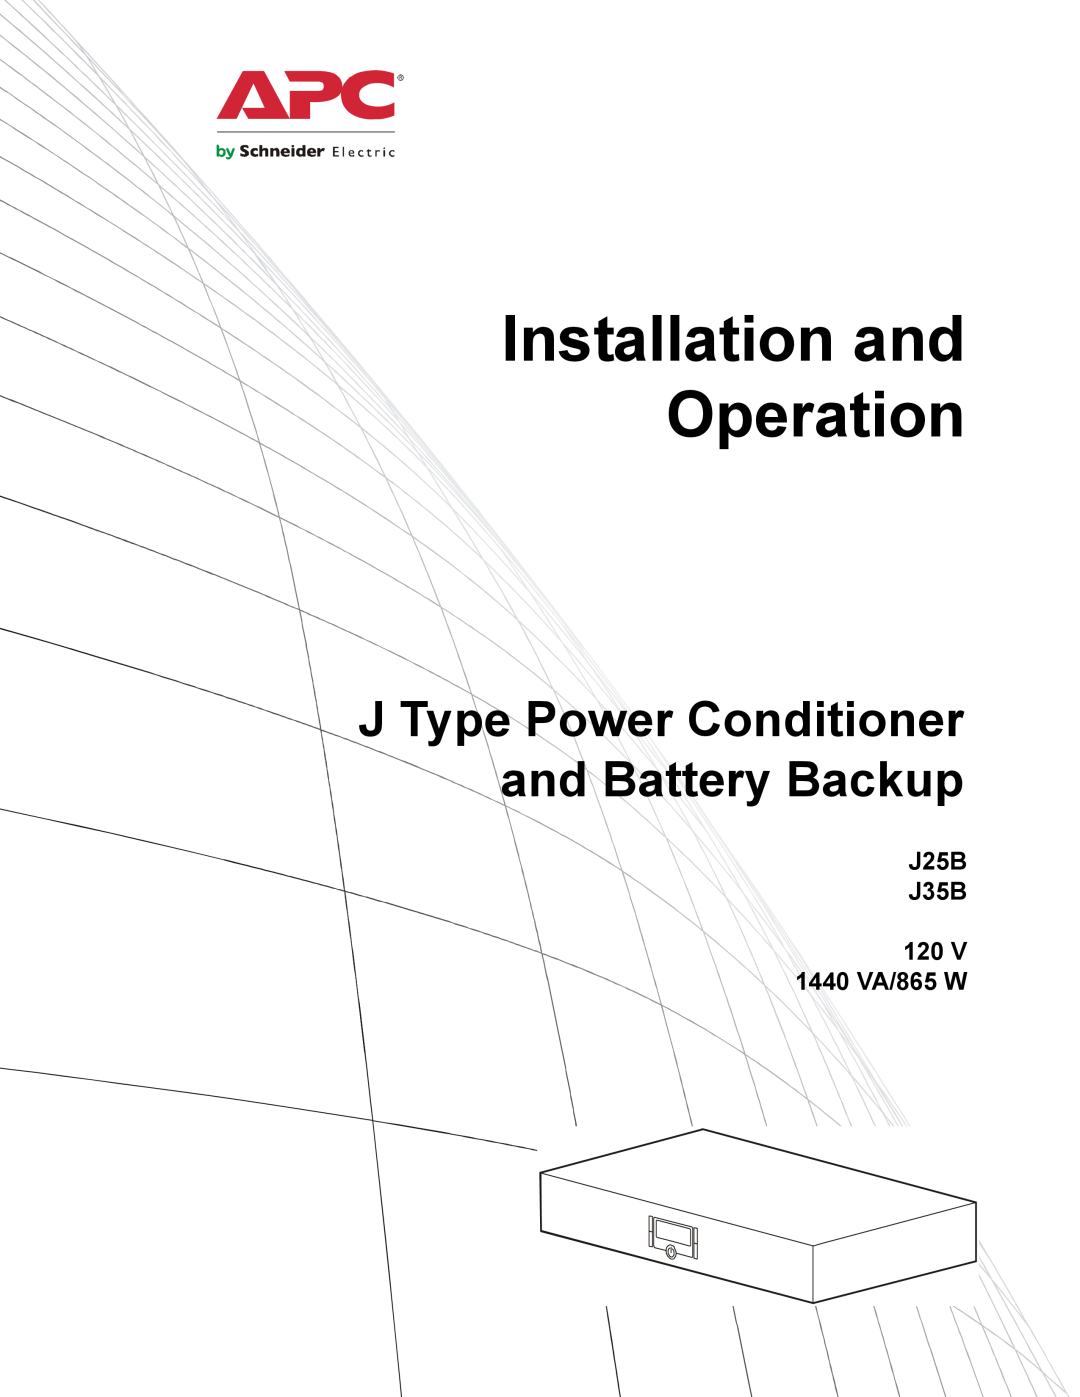 APC 120 V manual Installation and Operation, J Type Power Conditioner and Battery Backup, J25B J35B 120 1440 VA/865 W 